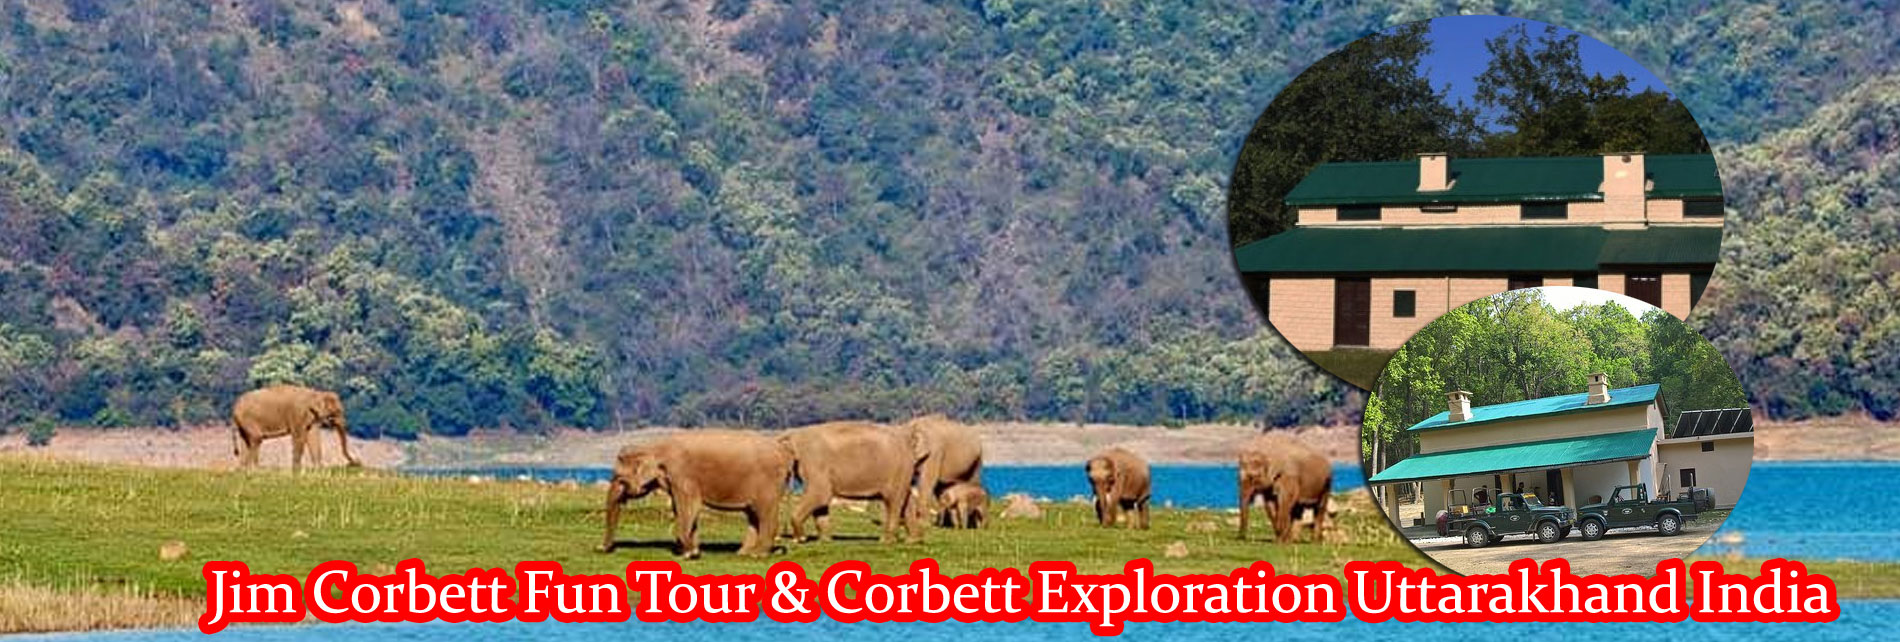 Jim Corbett Fun Tour & Corbett Exploration Uttarakhand India